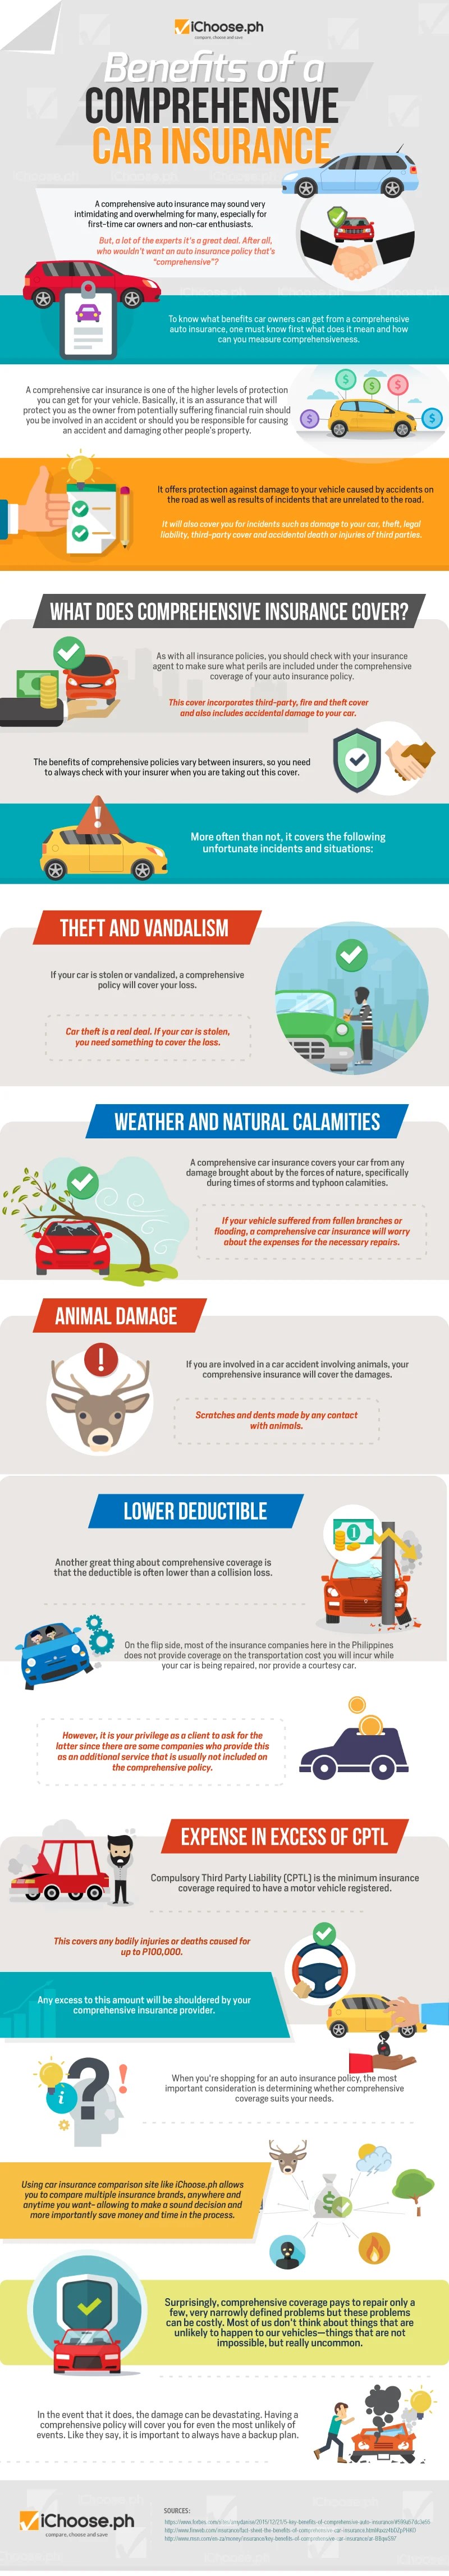 Top benefits of a comprehensive car insurance